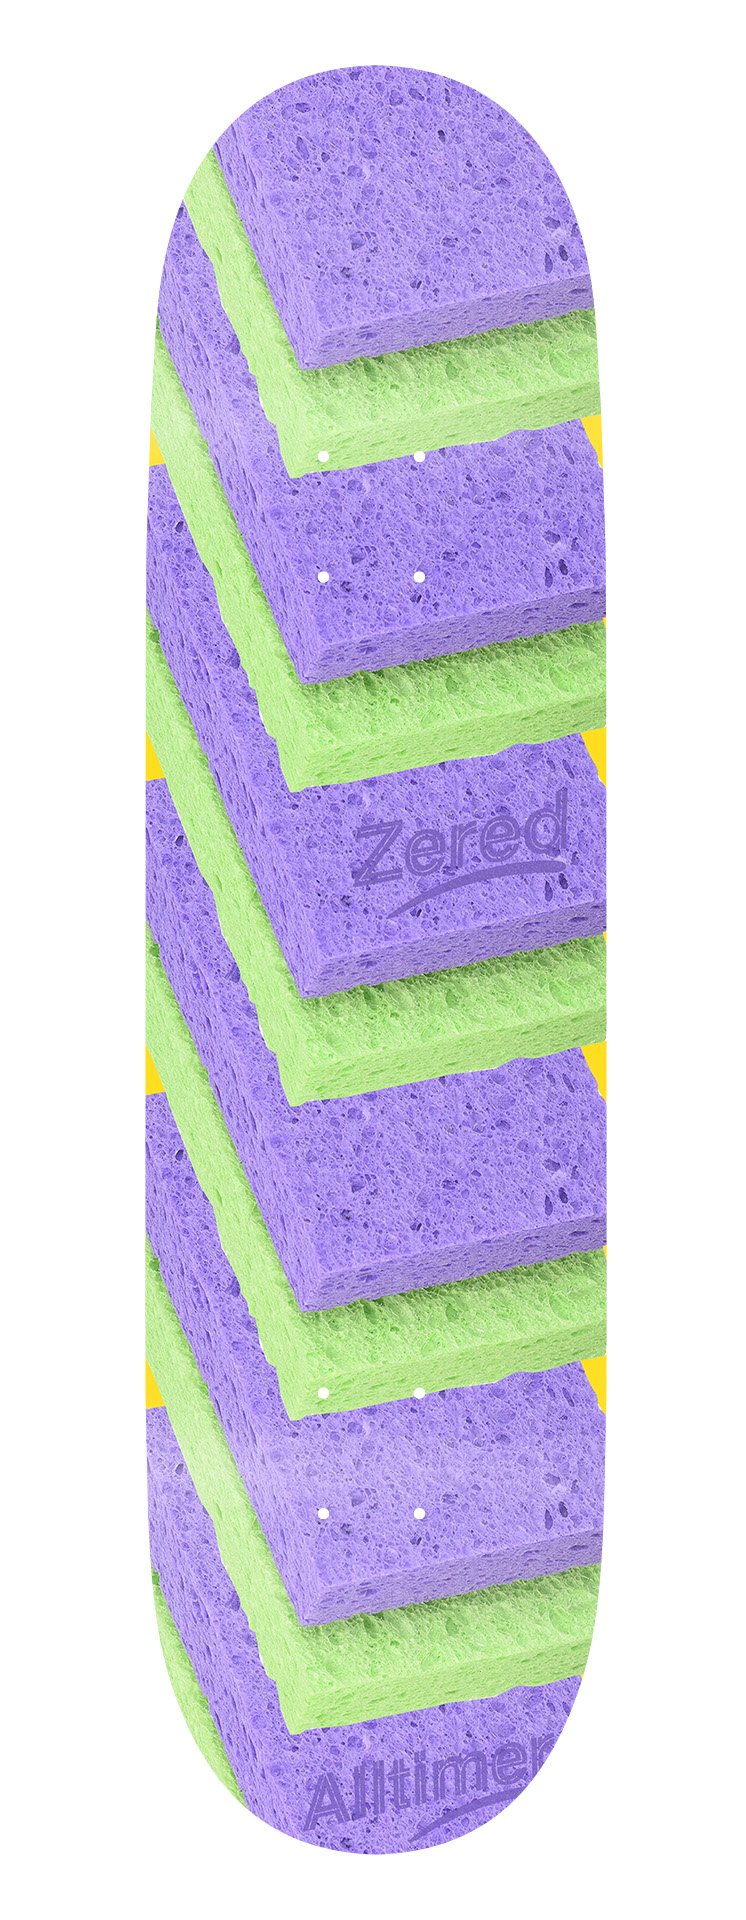 Clean Up Zered 8.3 Sponges